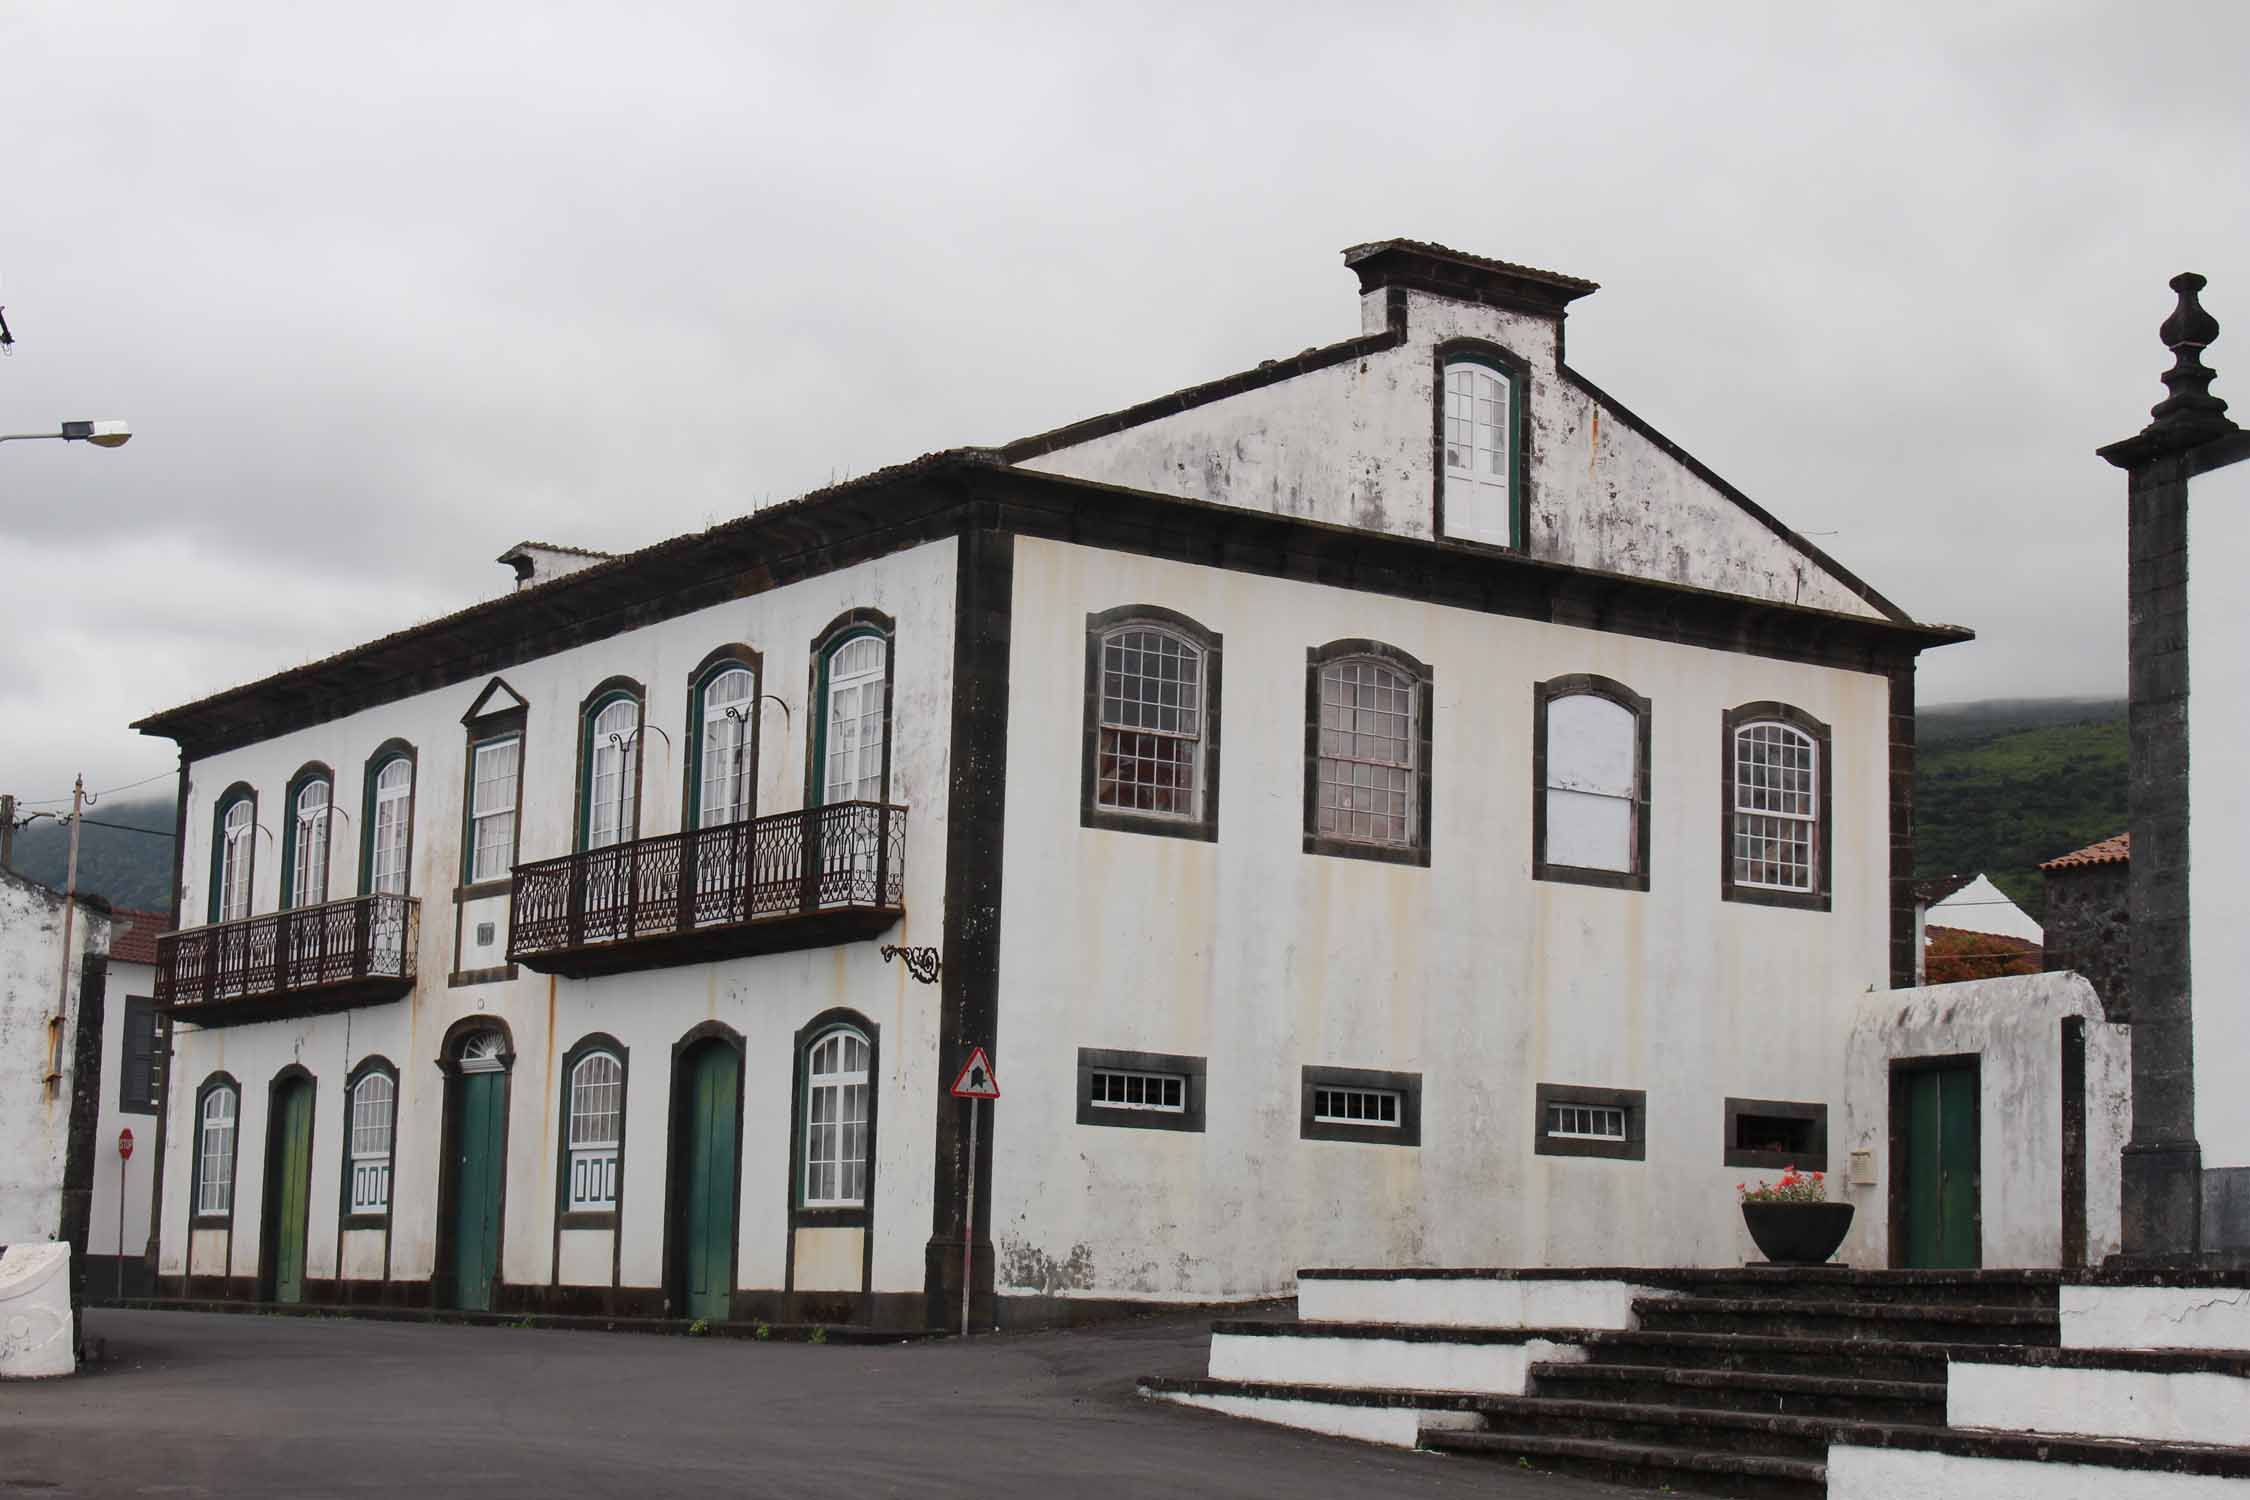 Açores, Île de Pico, Santo Antonio, bâtiment